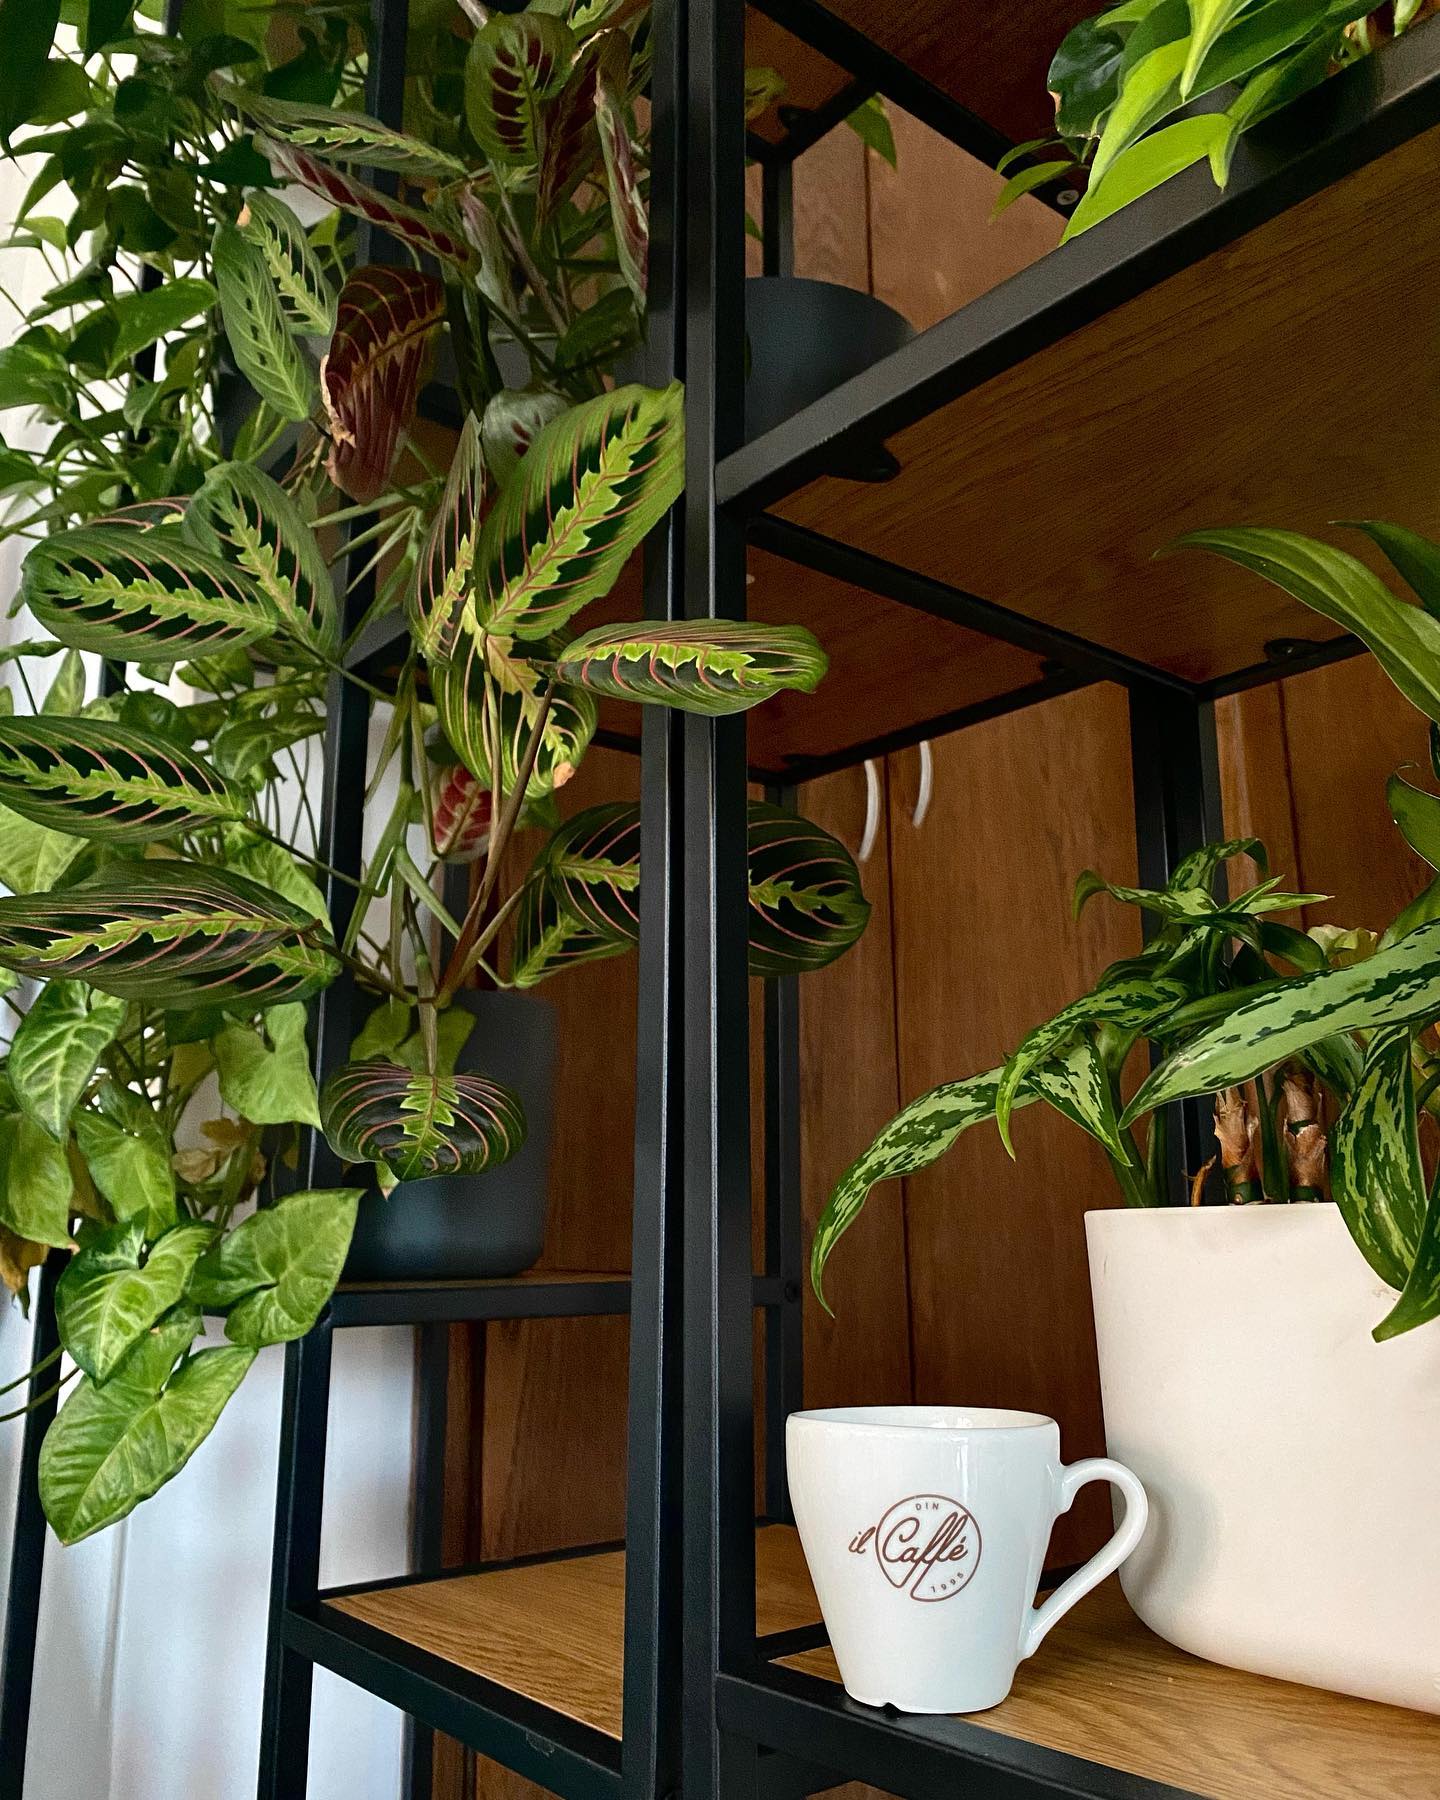 Office vibes 🌱 
__
#plantscorner #shadesofgreen #baldwinromania